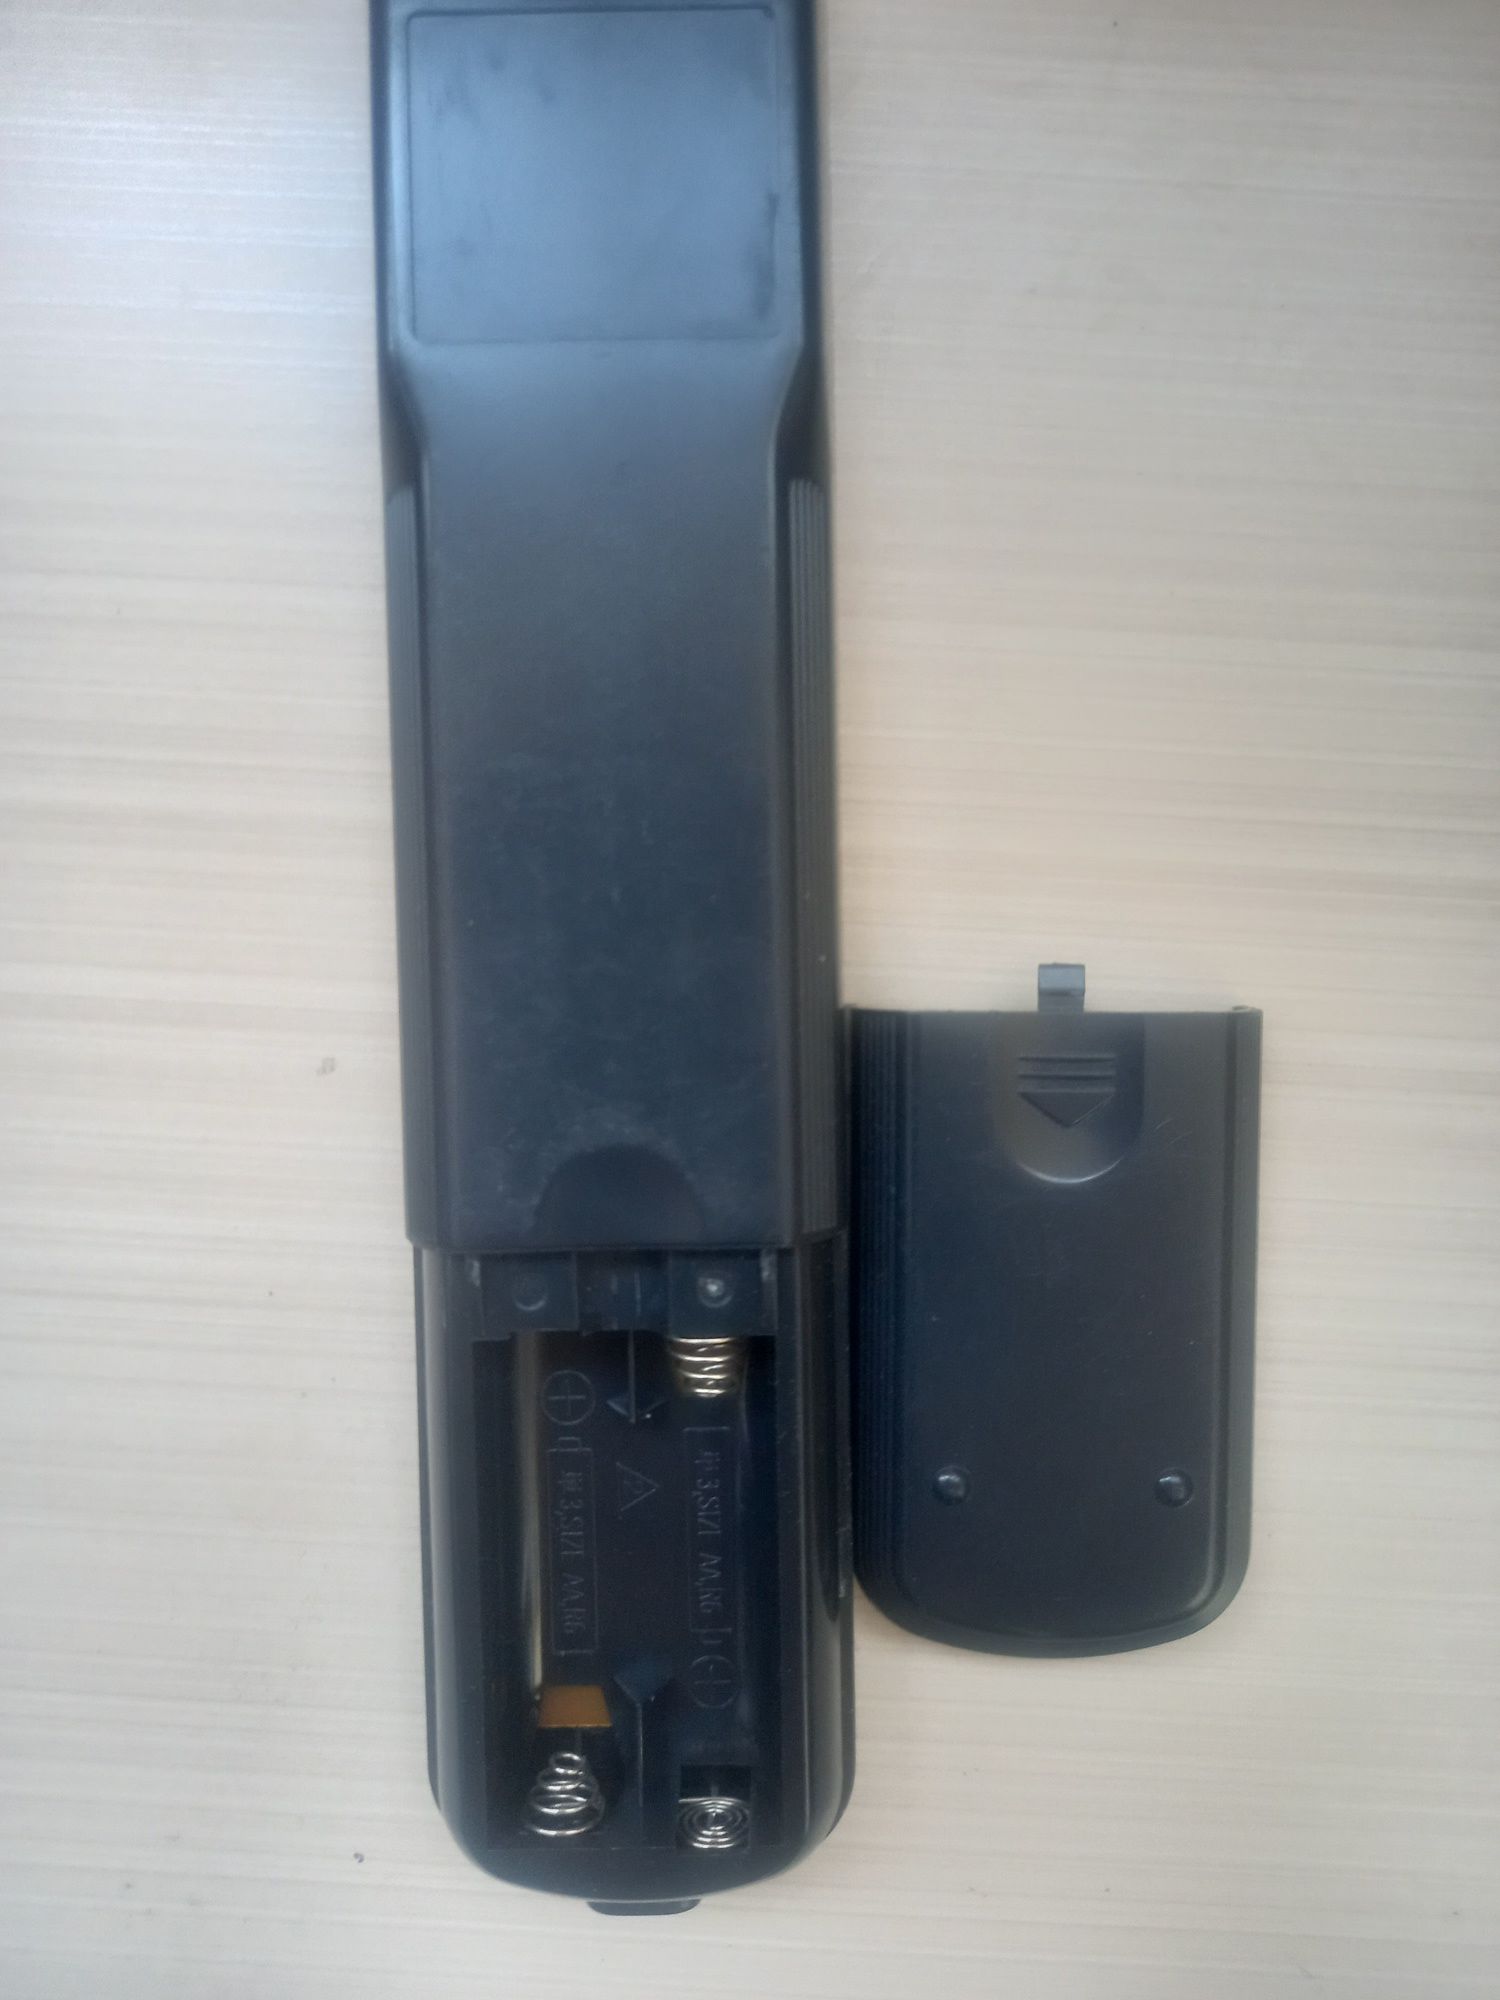 Дистанционно Sony RM-U185 (RM-U306)